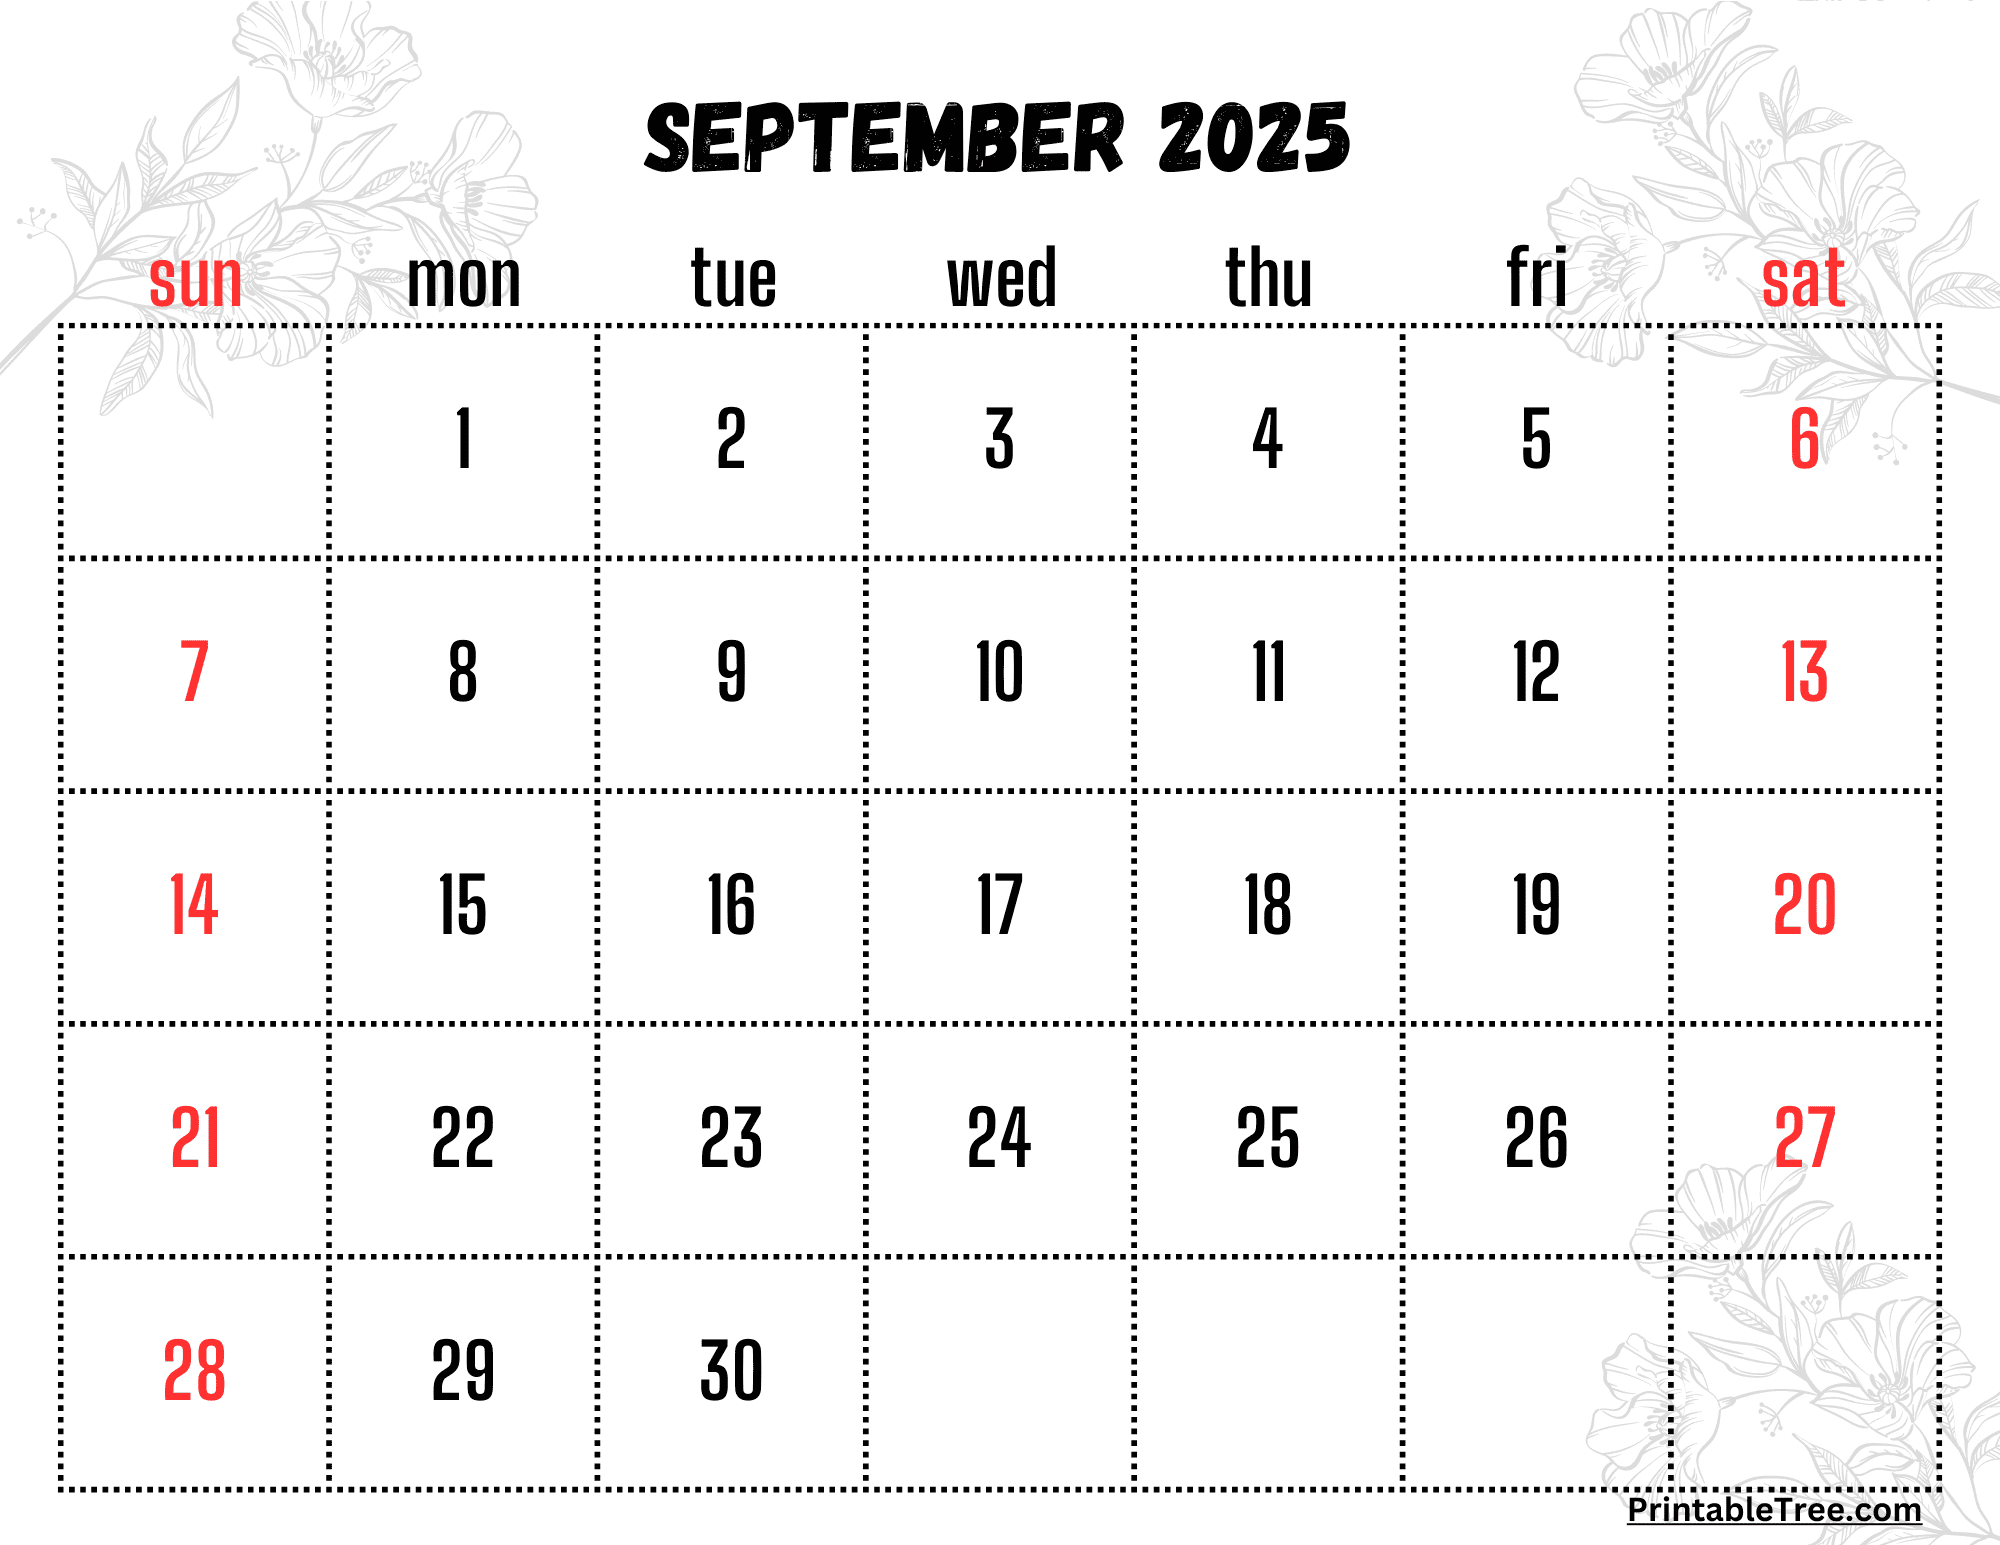 September 2025 Calendar Floral